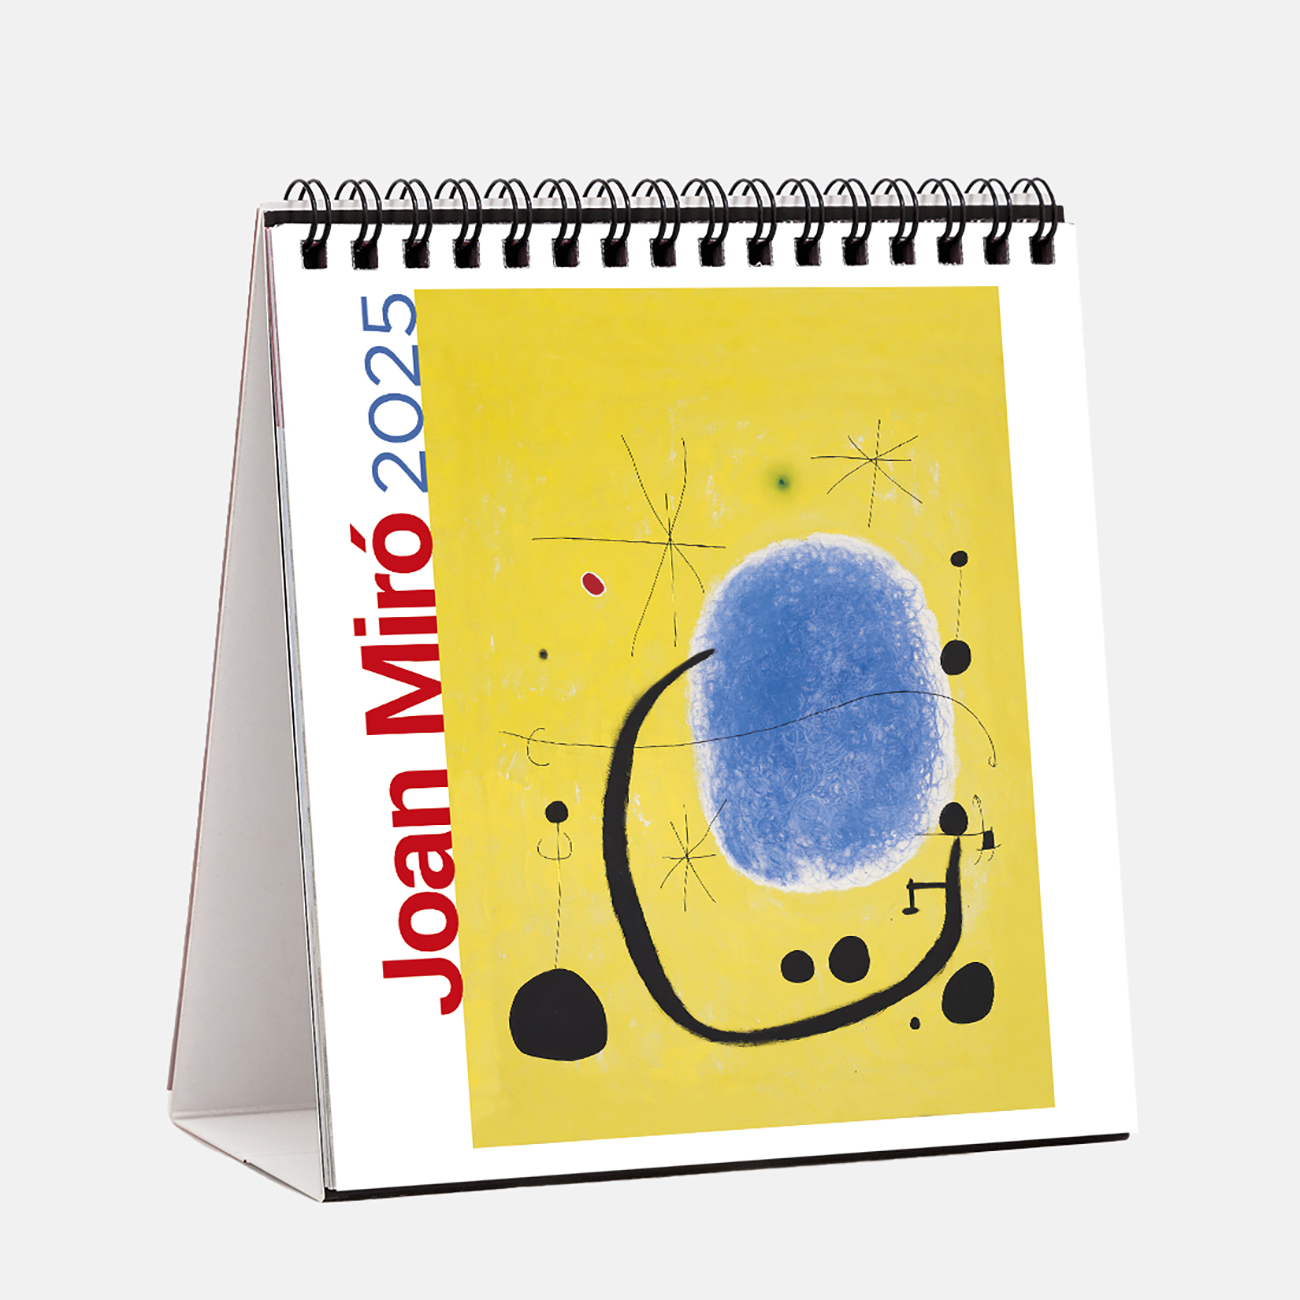 Calendari 2025 Miró - Barcelona s25mi2 calendario sobremesa 2025 joan miro barcelona